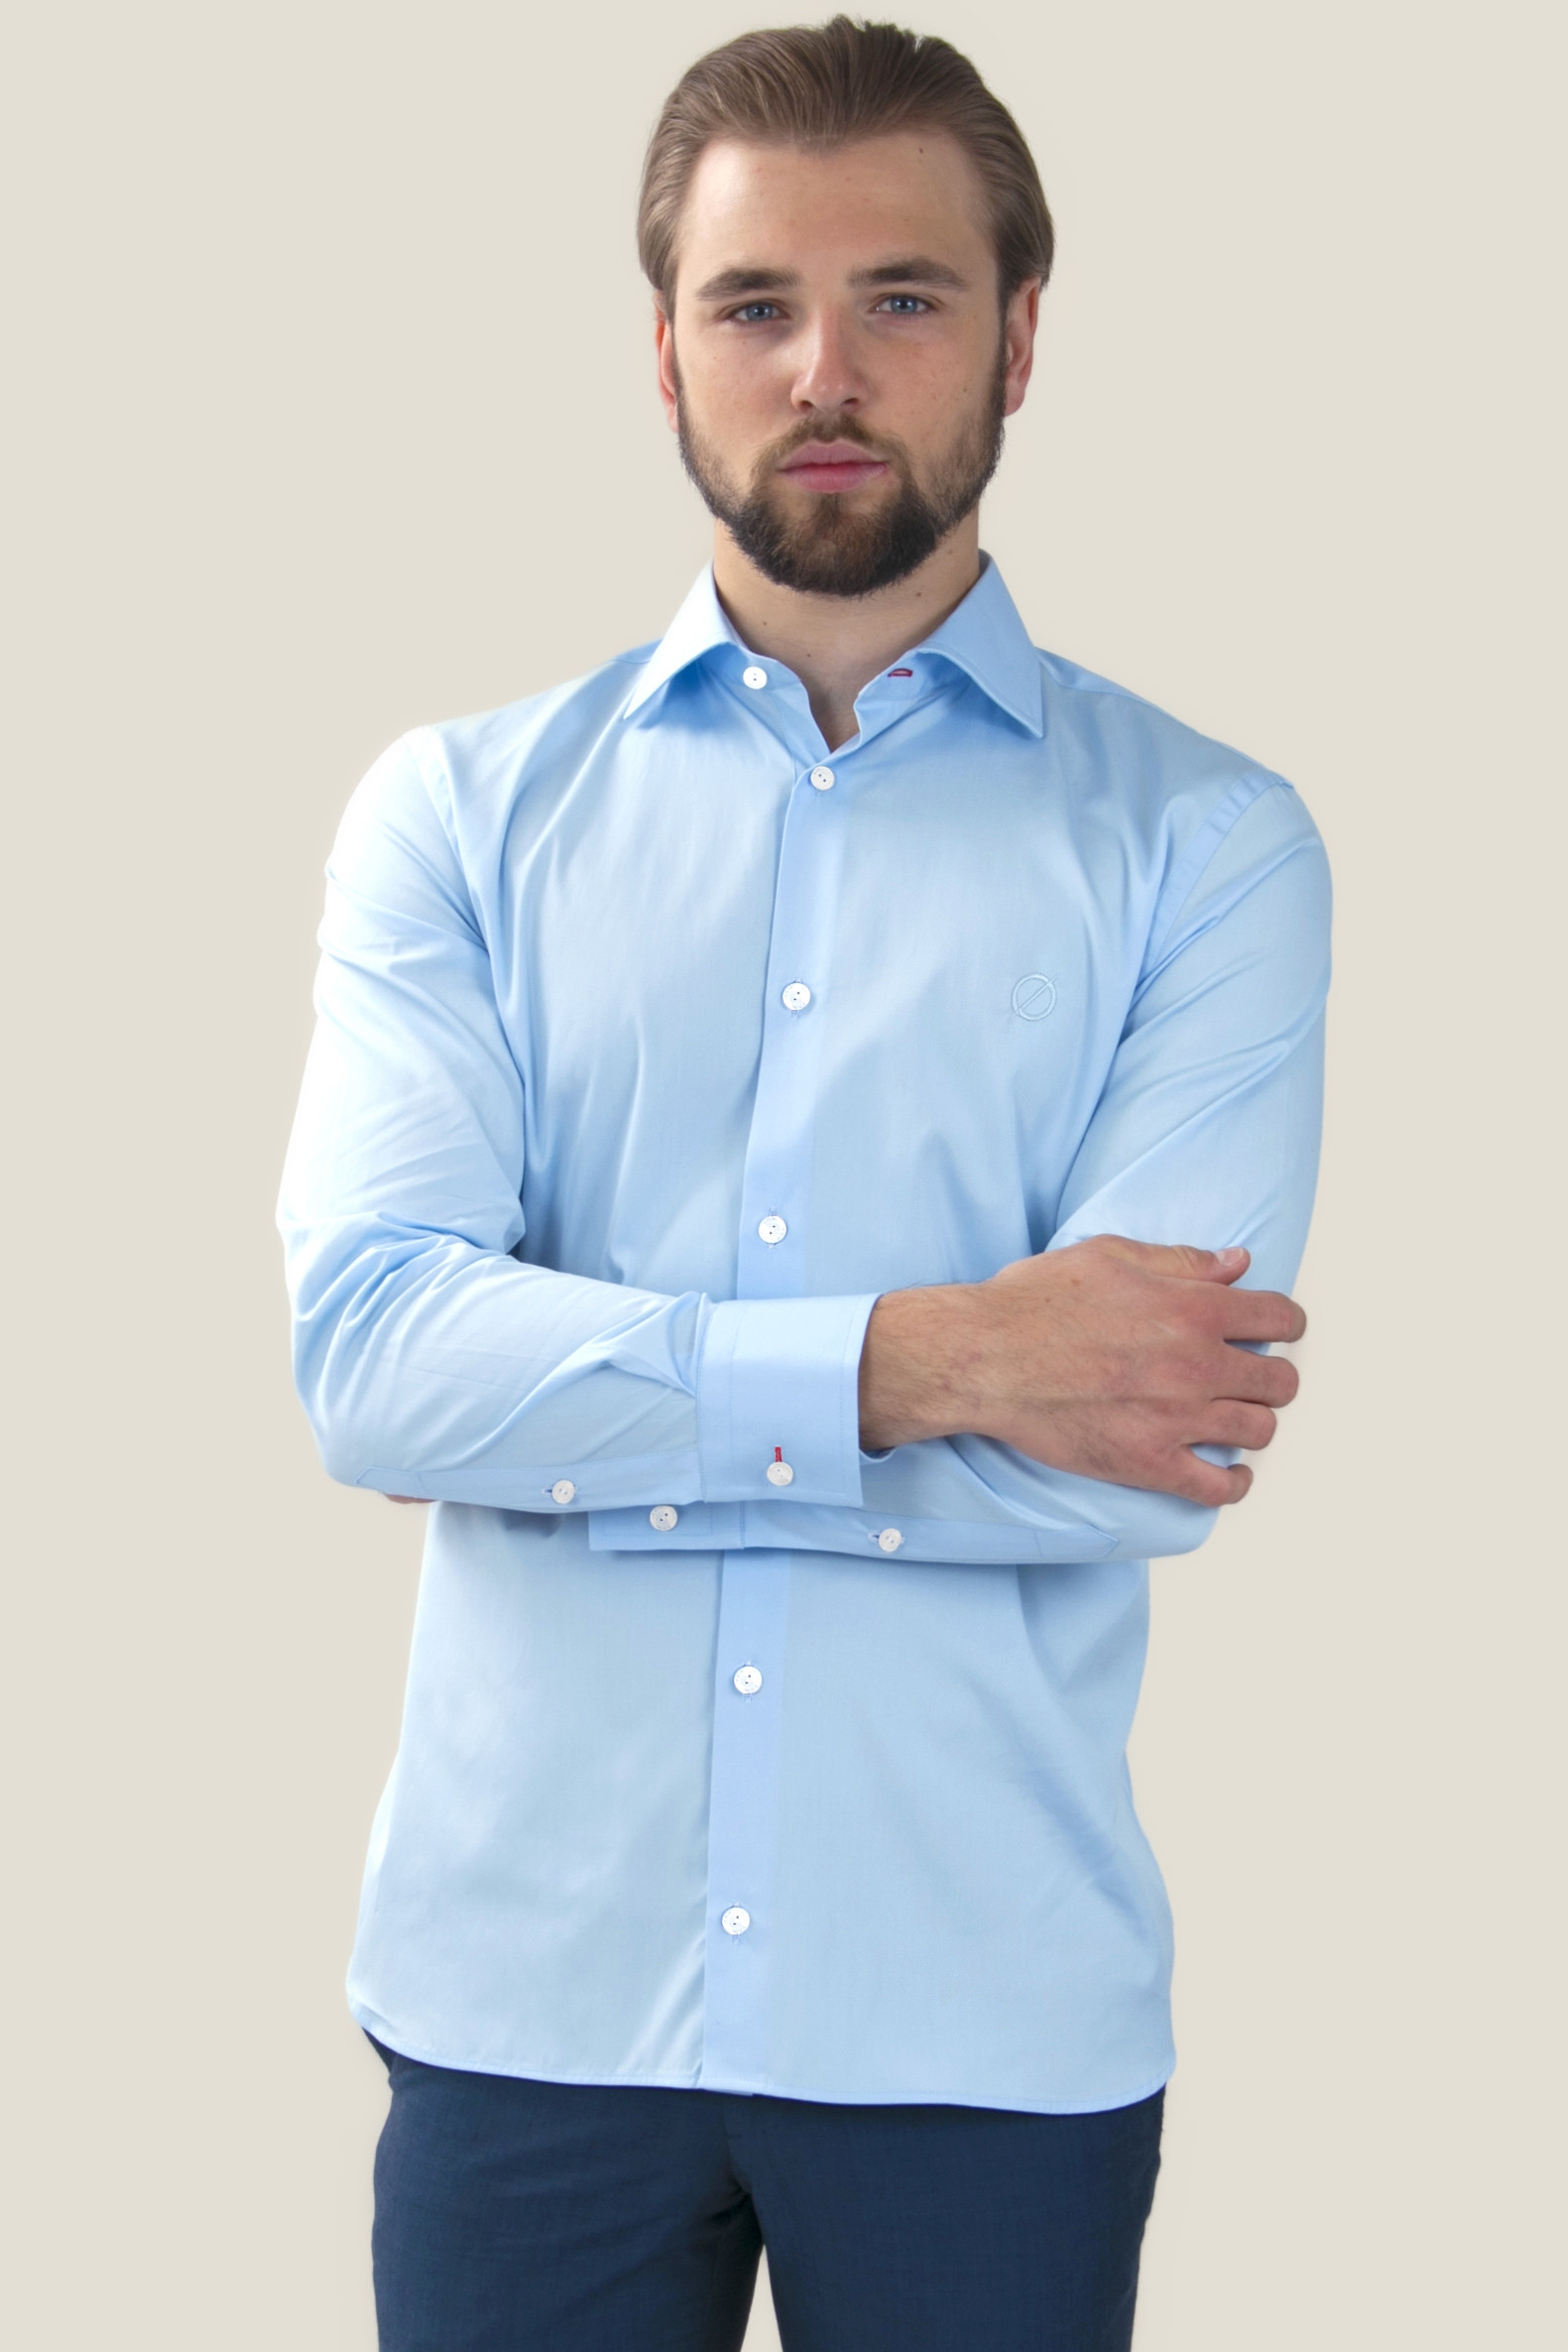 Chemise Executive coupe ajustée - DIEGO GARCIA bleu ciel